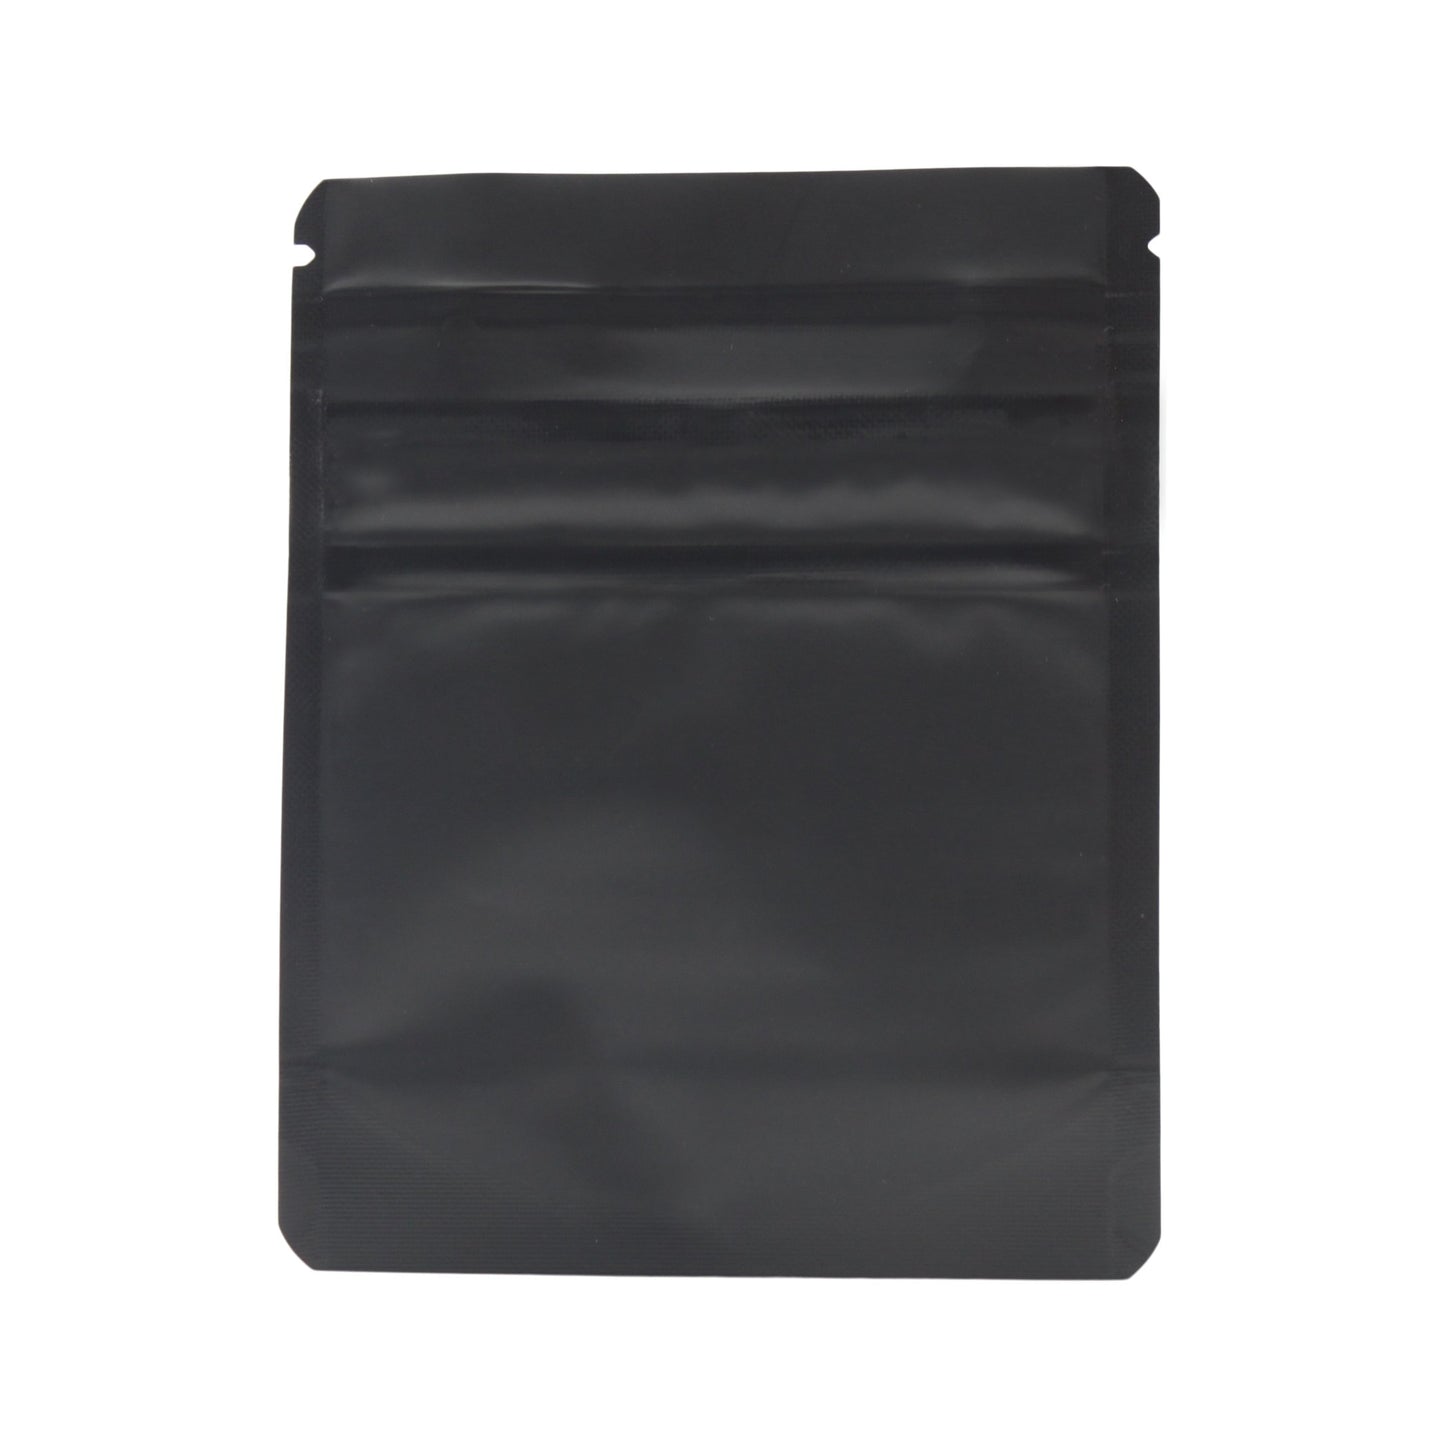 Bag King Child-Resistant Opaque Bag (1 gram) 3.5” x 4.5” Matte Black